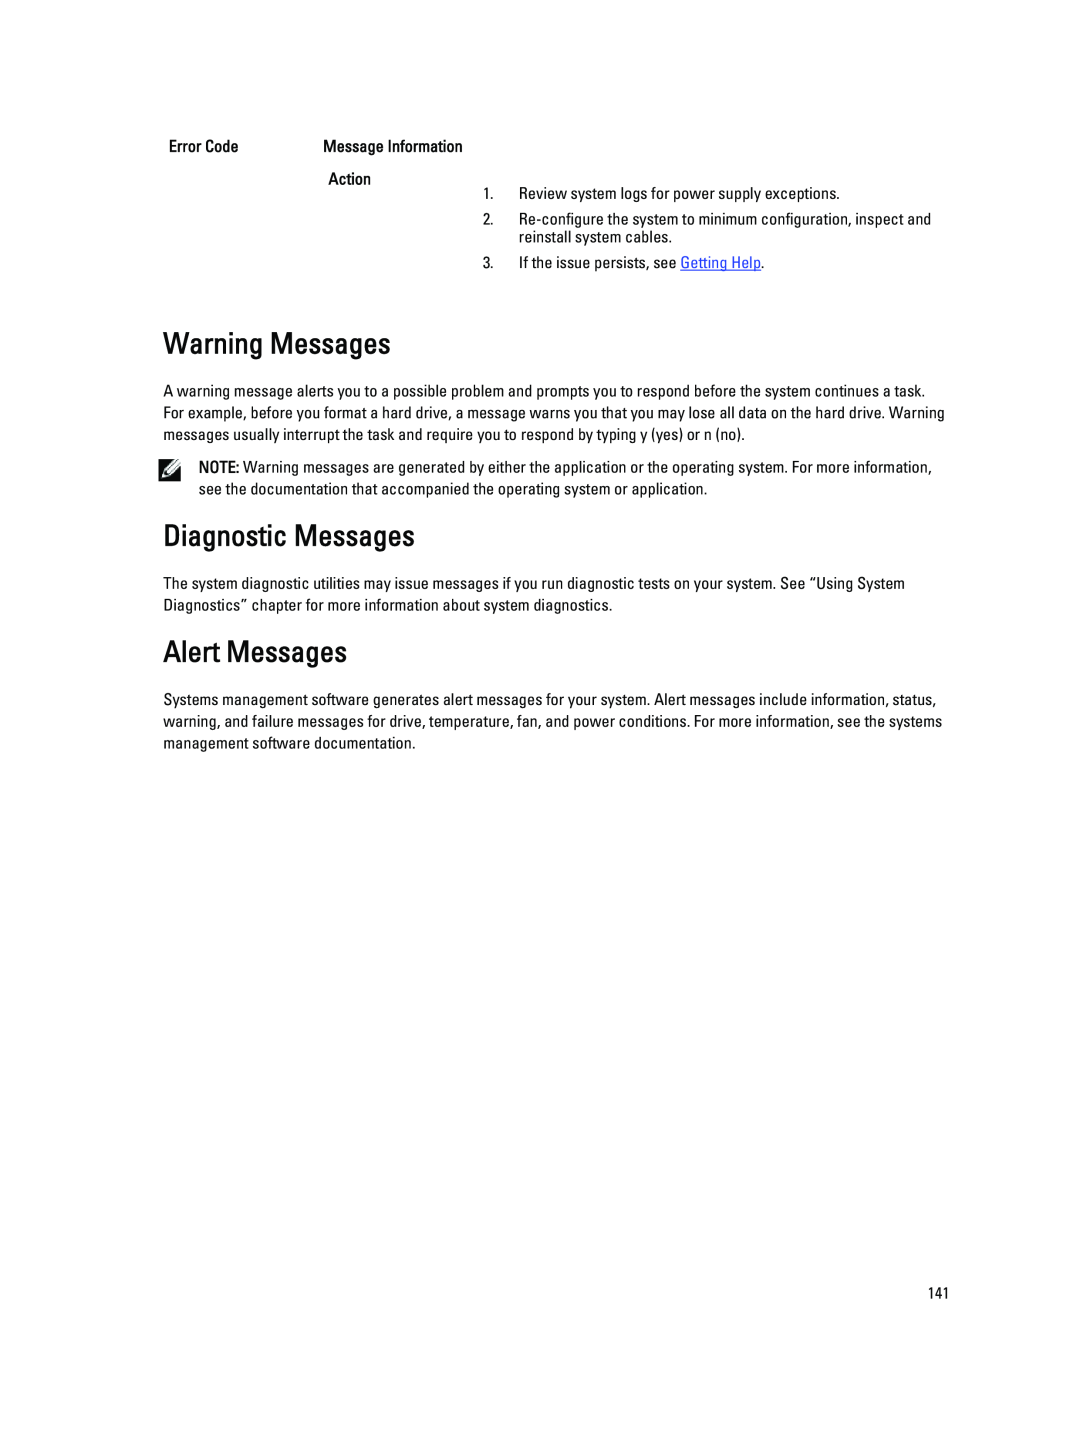 Dell R820 owner manual Warning Messages, Diagnostic Messages, Alert Messages 